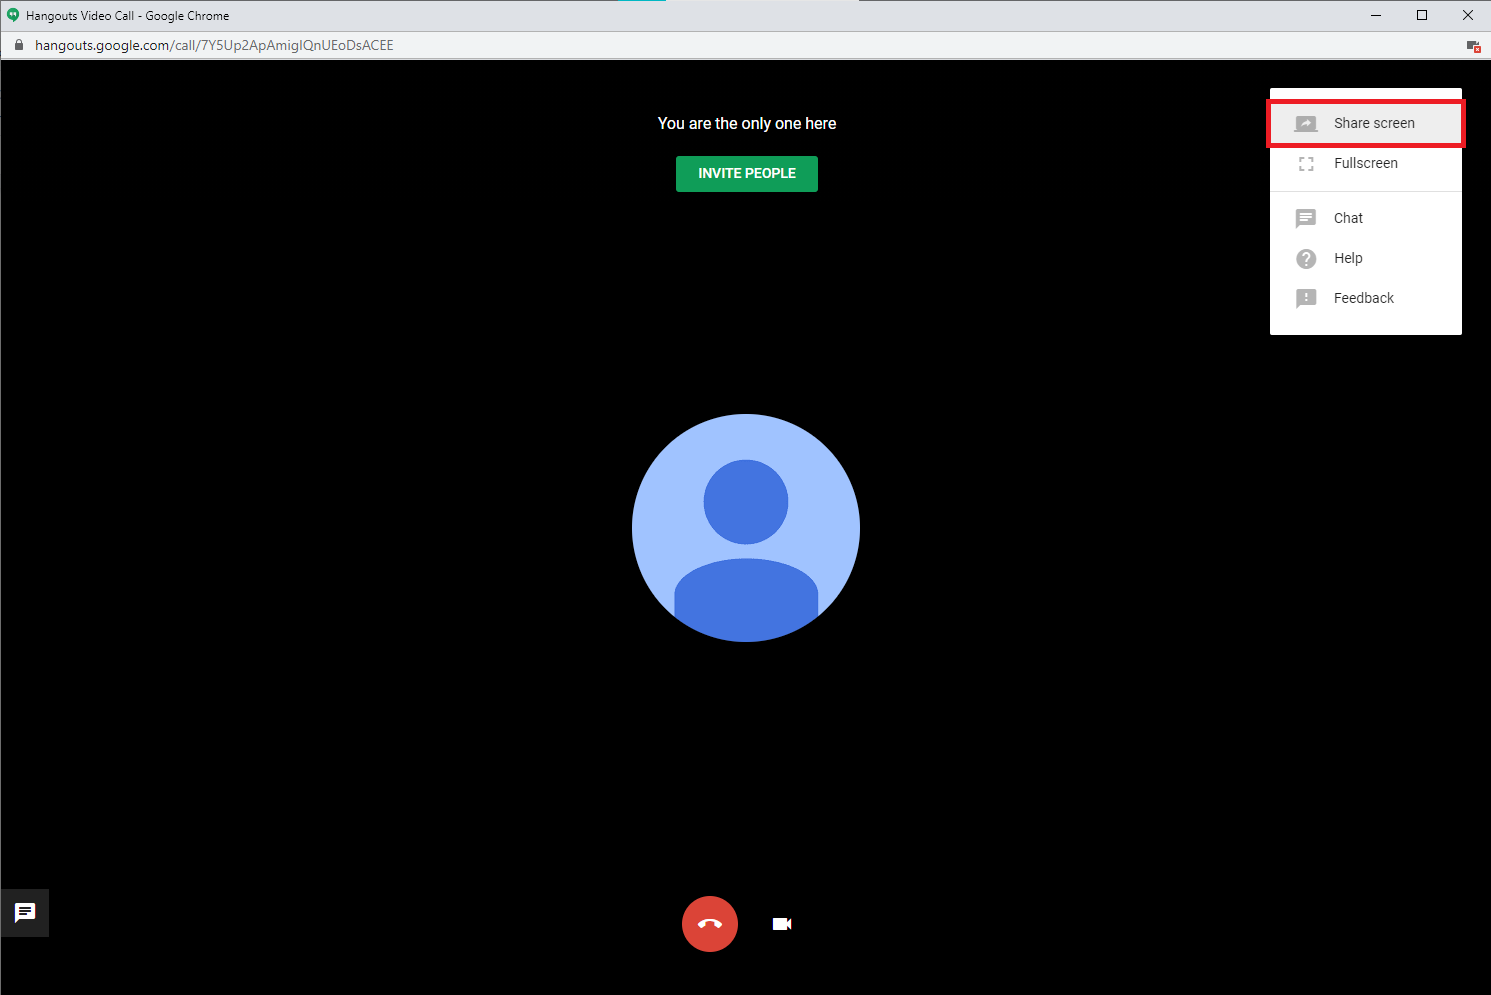 google hangouts screen sharing remote desktop